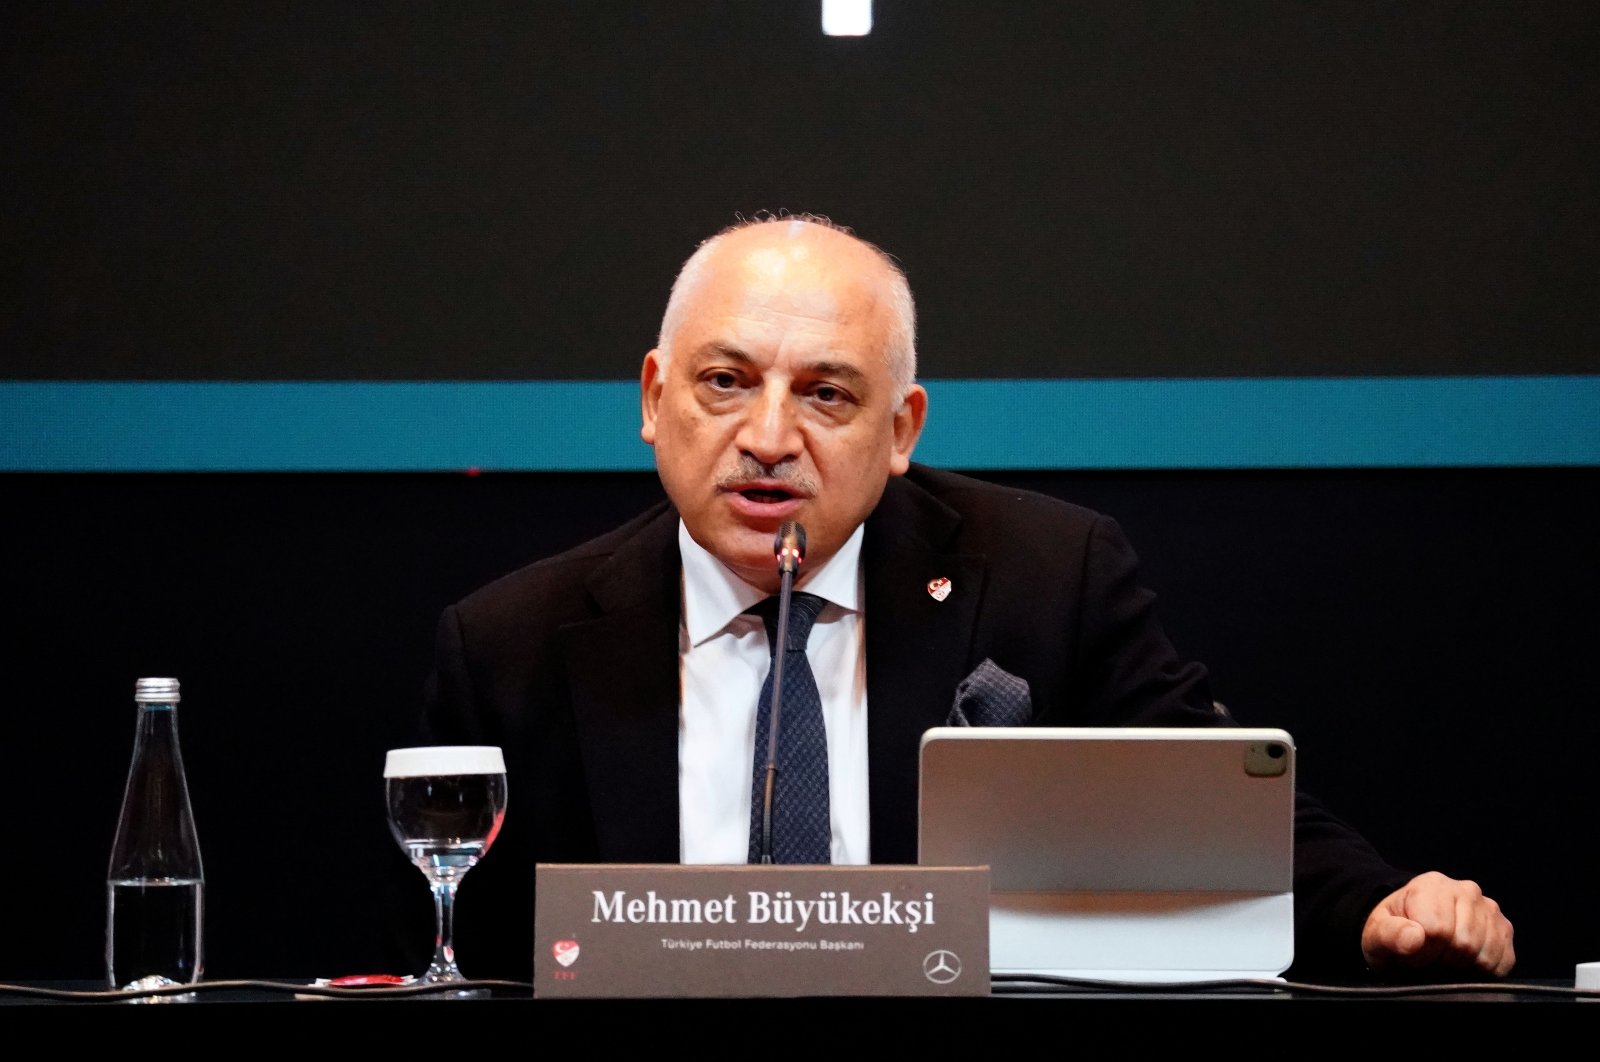 TFF President Mehmet Büyükekşi speaks during a sponsorship renewal agreement with Mercedes-Benz, Istanbul, Türkiye, March 21, 2023. (IHA Photo)